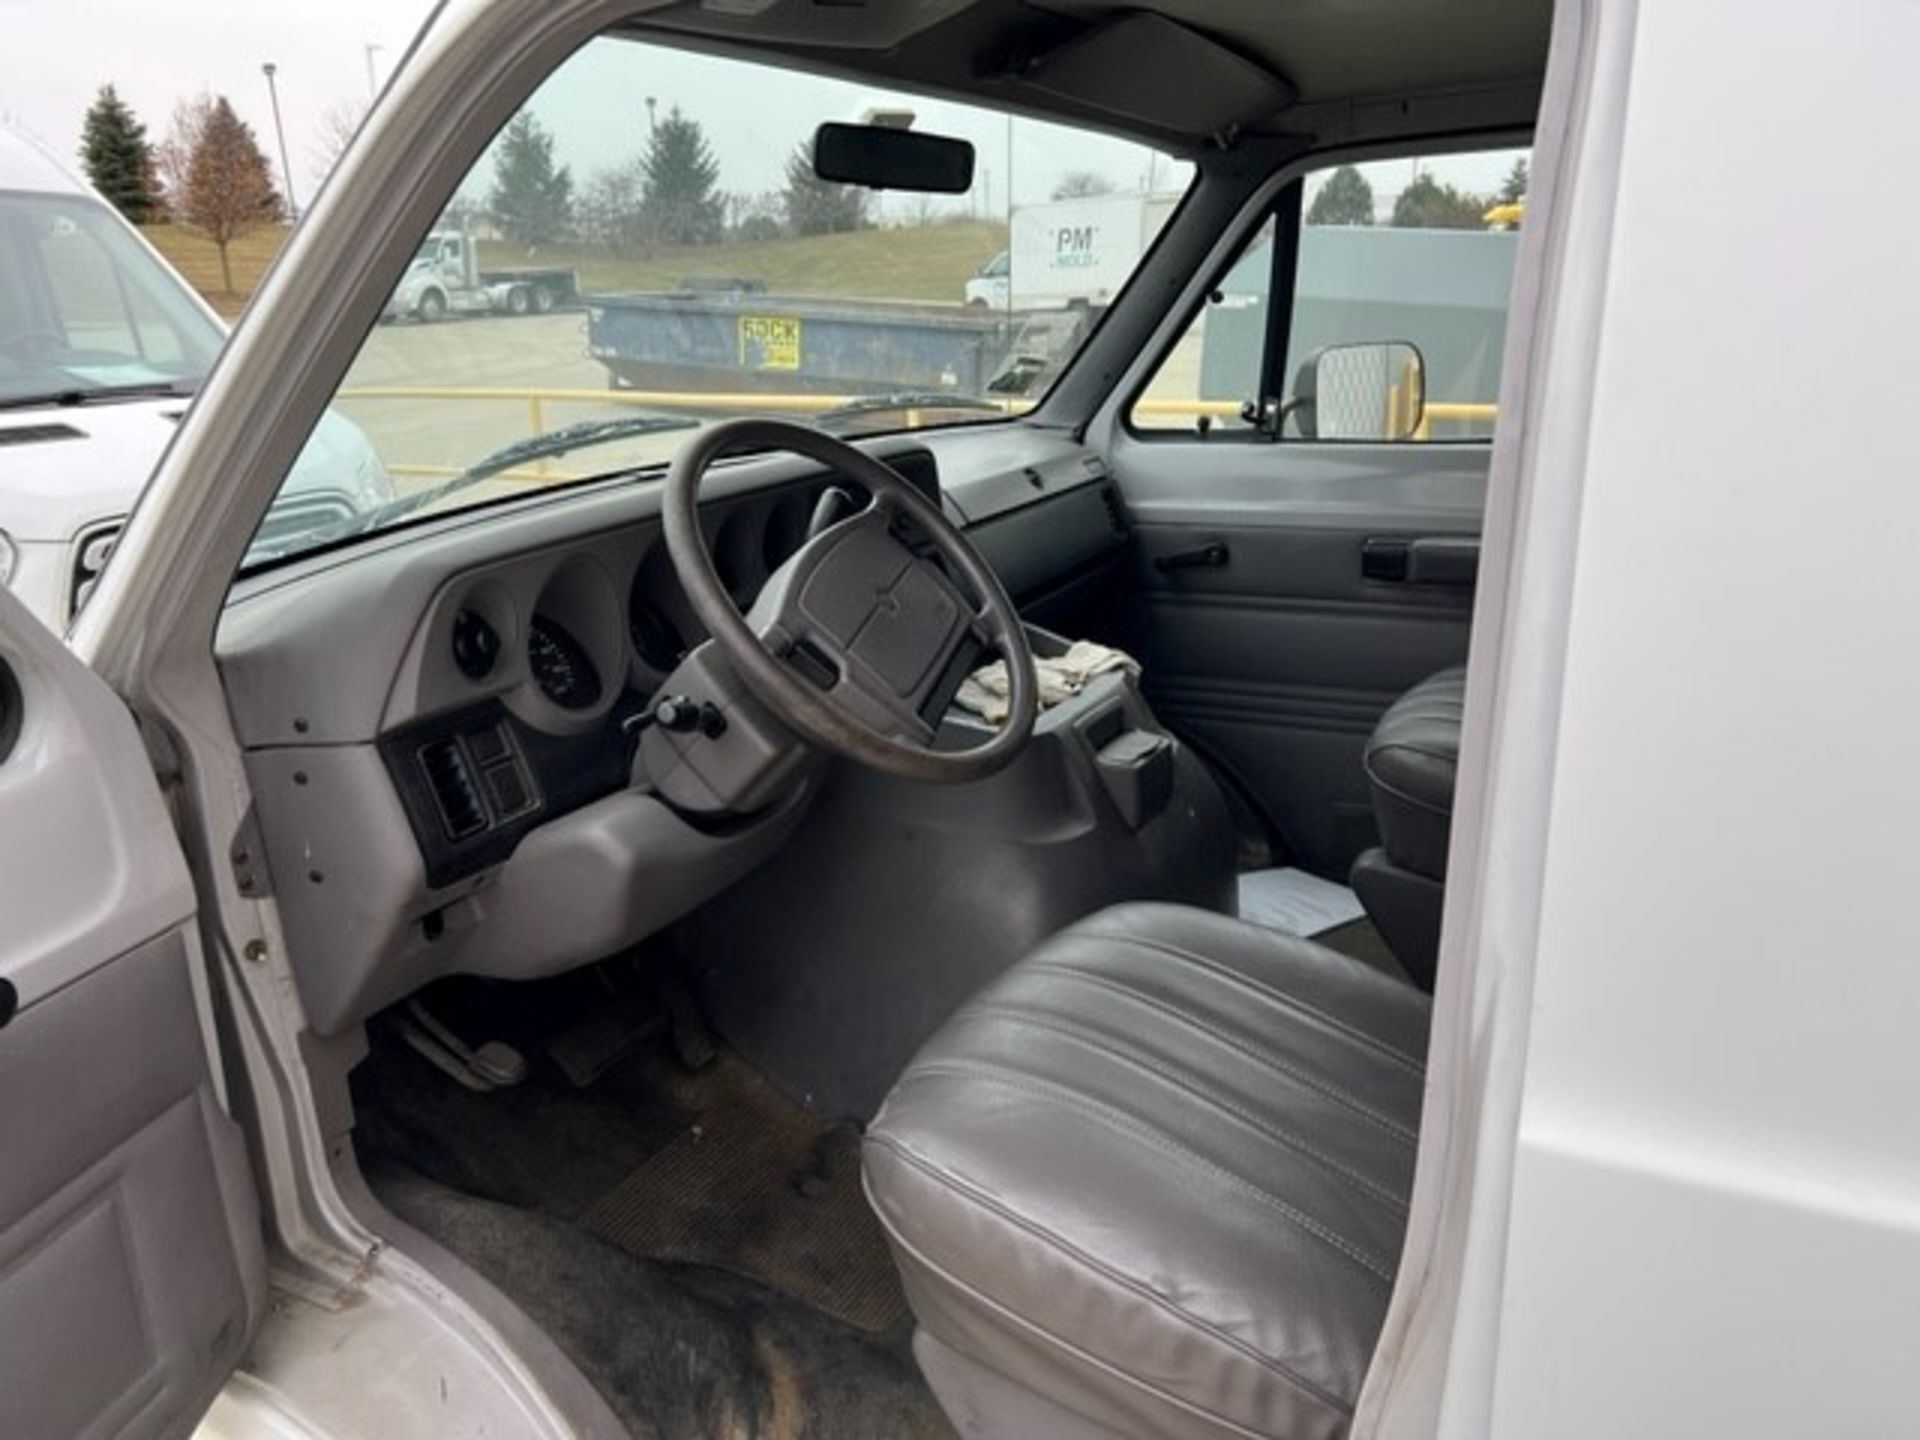 1994 DODGE RAM Work Van, VIN # 2B7HB21Y9SK529140, V8, Gas - Image 8 of 10